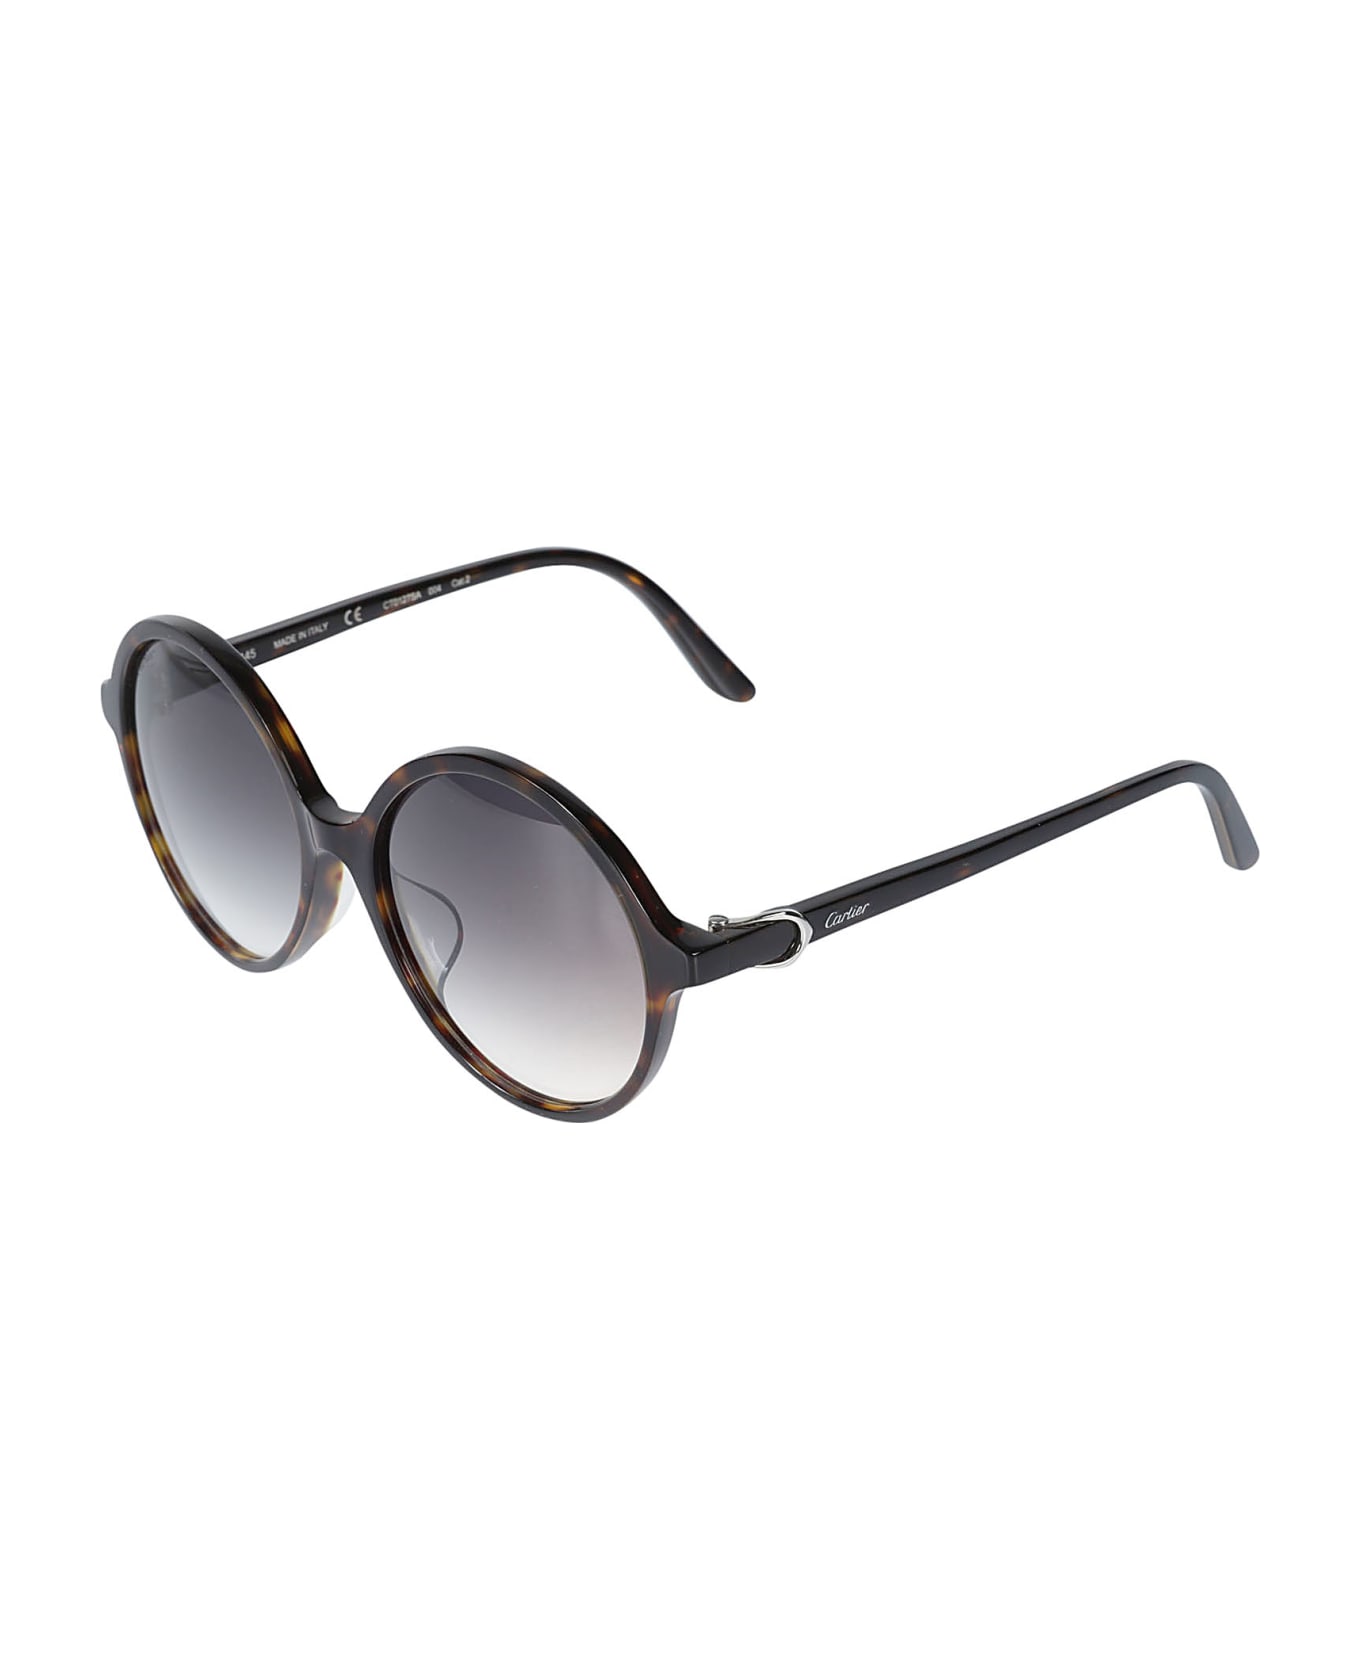 Cartier Eyewear Round Frame Sunglasses - Brown/Grey